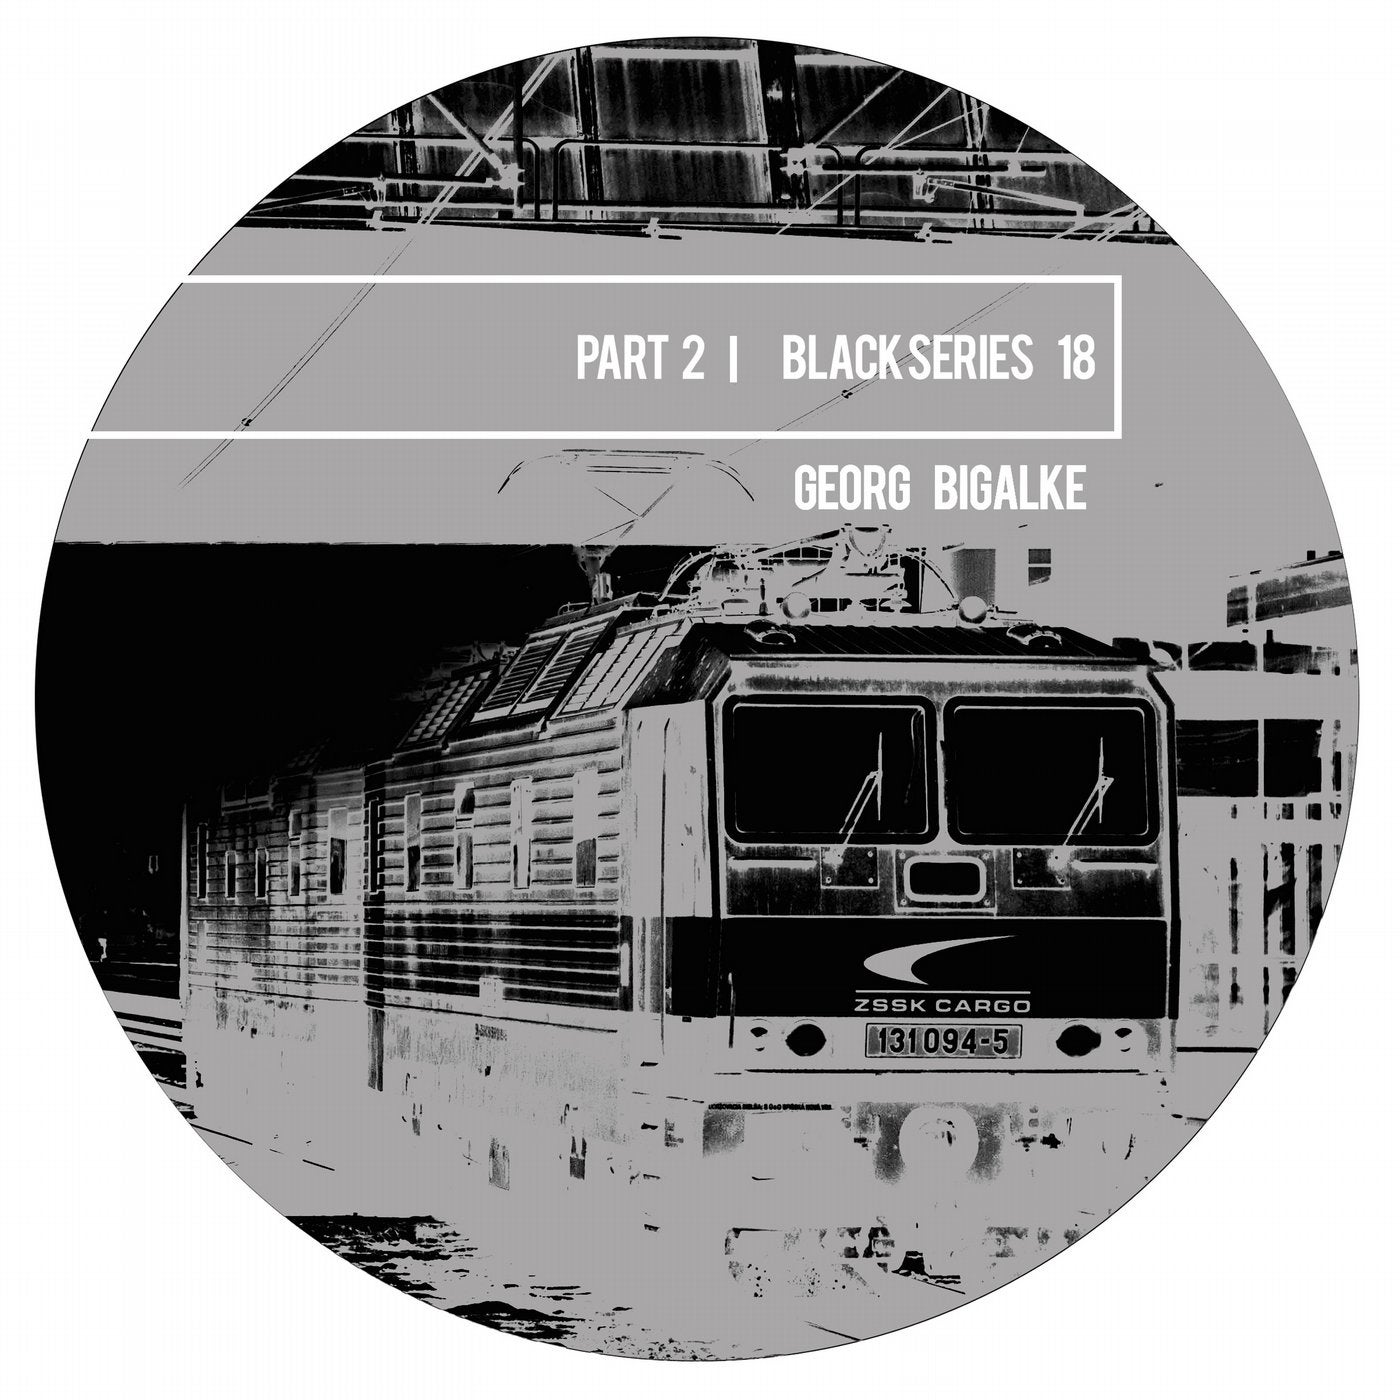 Black Series 18, Pt. 2